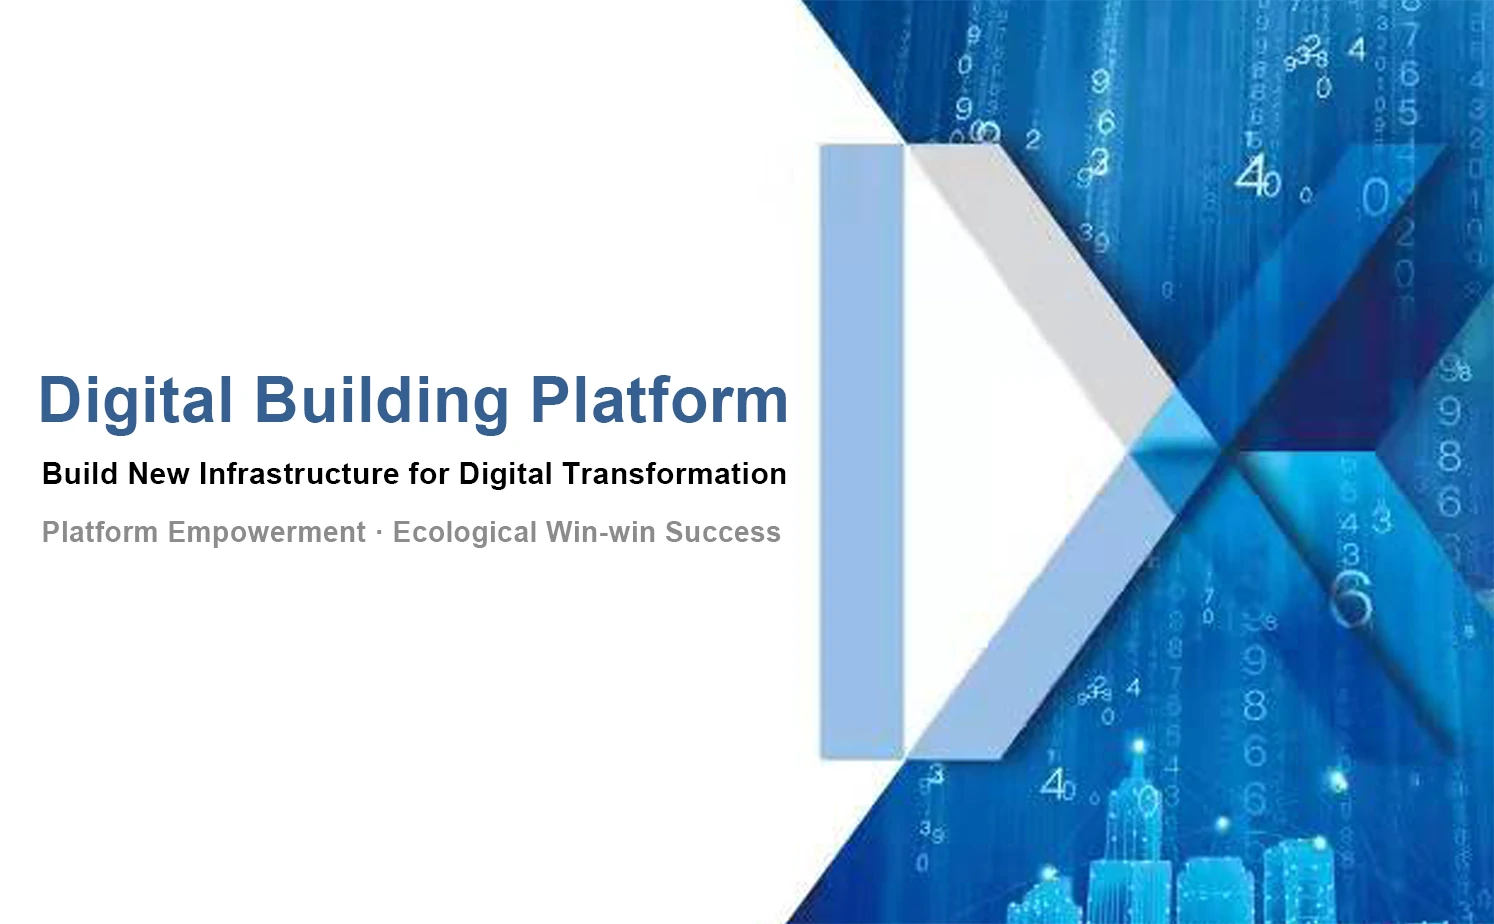 Digital Building Platform White Paper 
(Compact Edition)